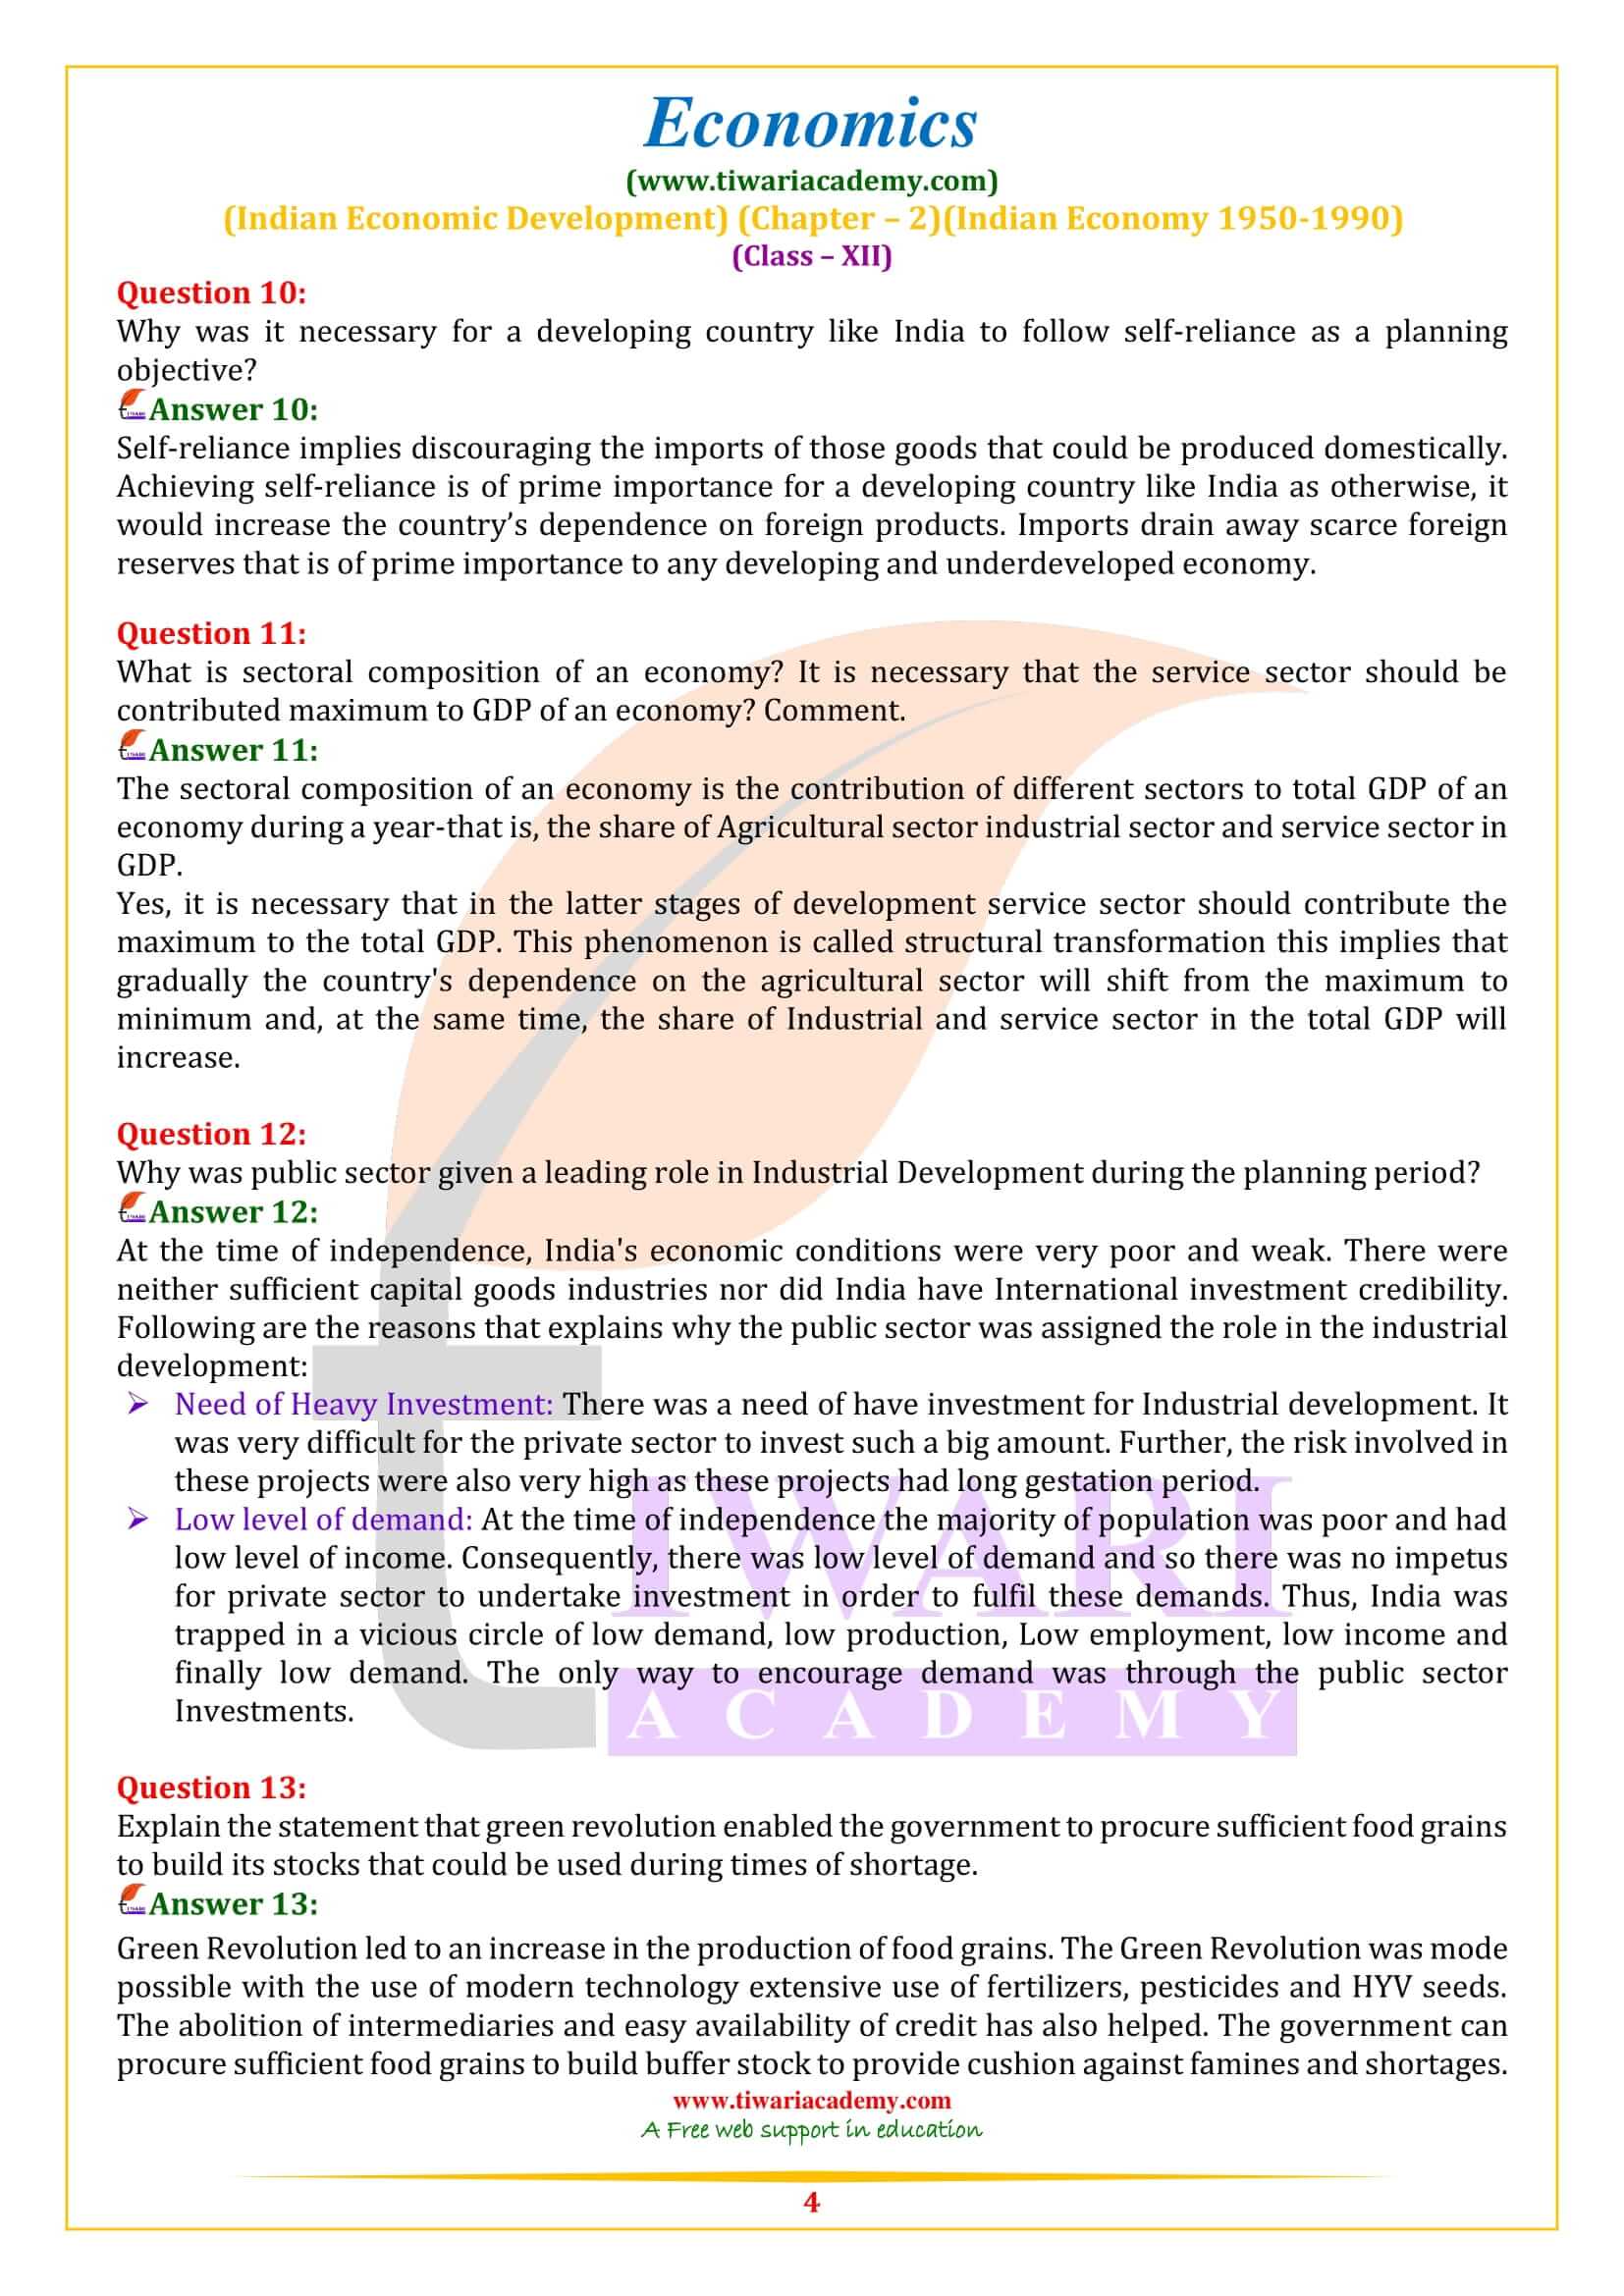 Class 12 Indian Economic Development Chapter 2 Question Answers